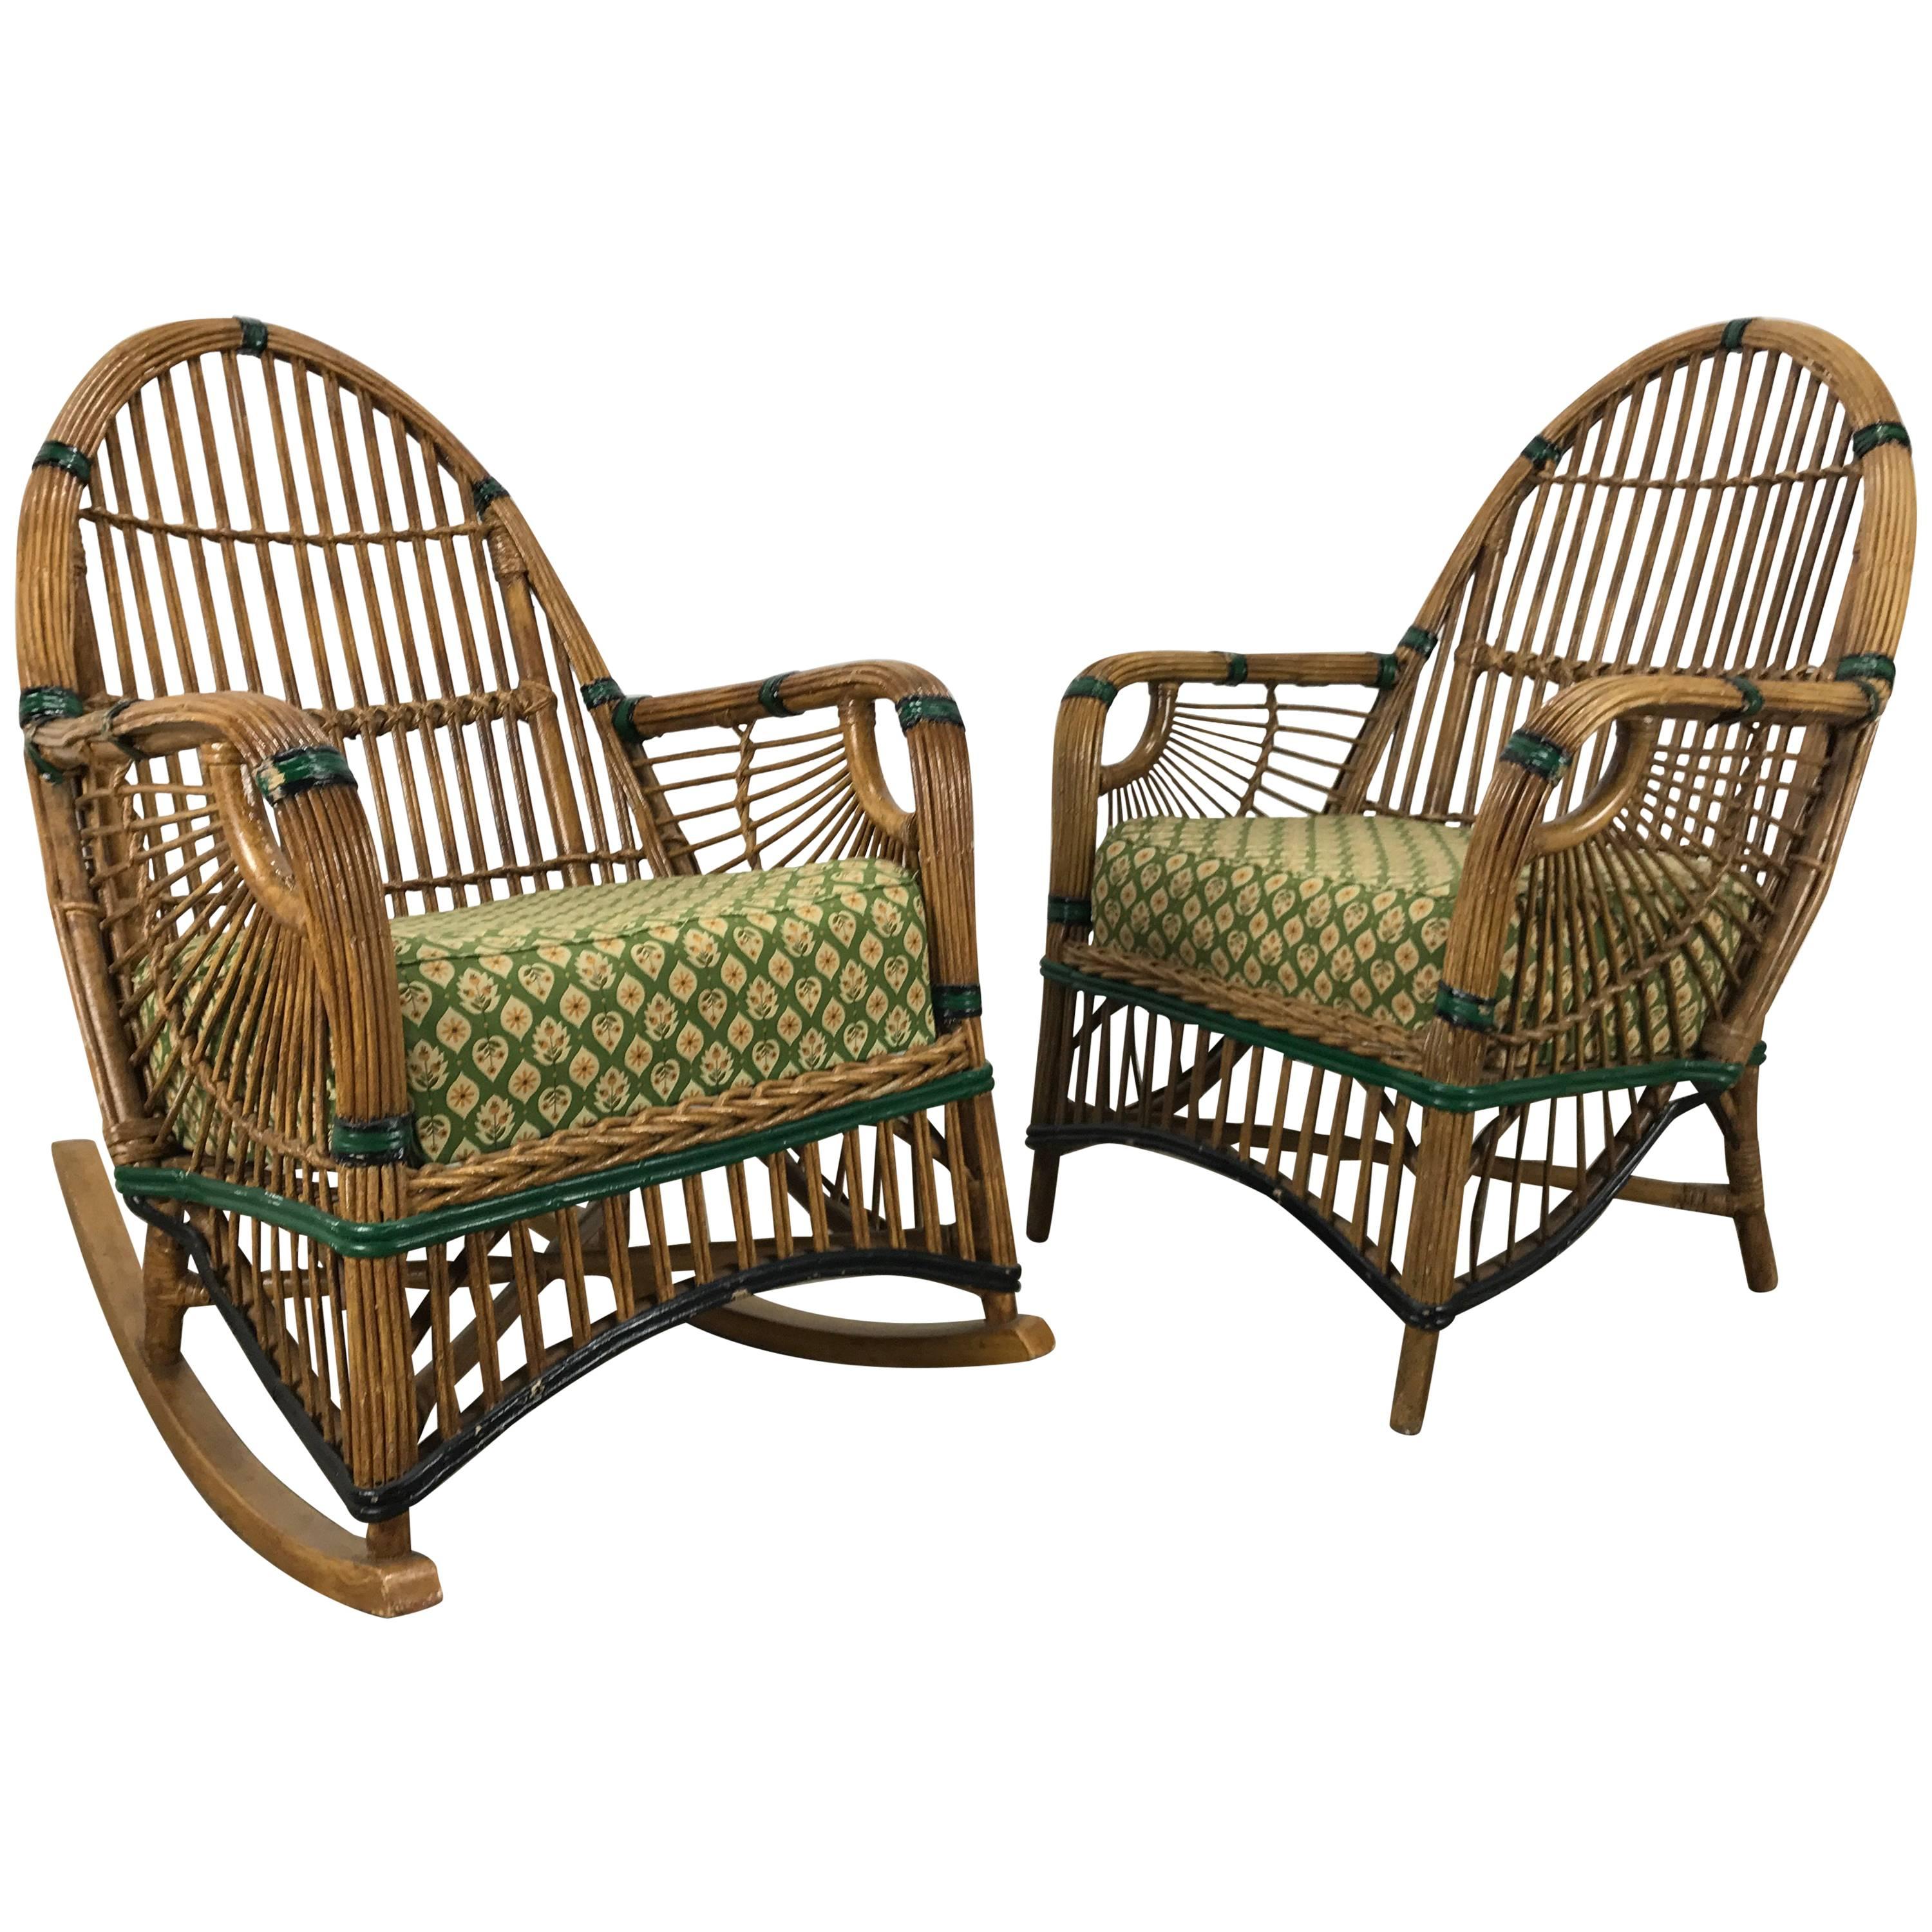 Stunning Pair of Art Deco Stick Wicker/Split Reed Chairs